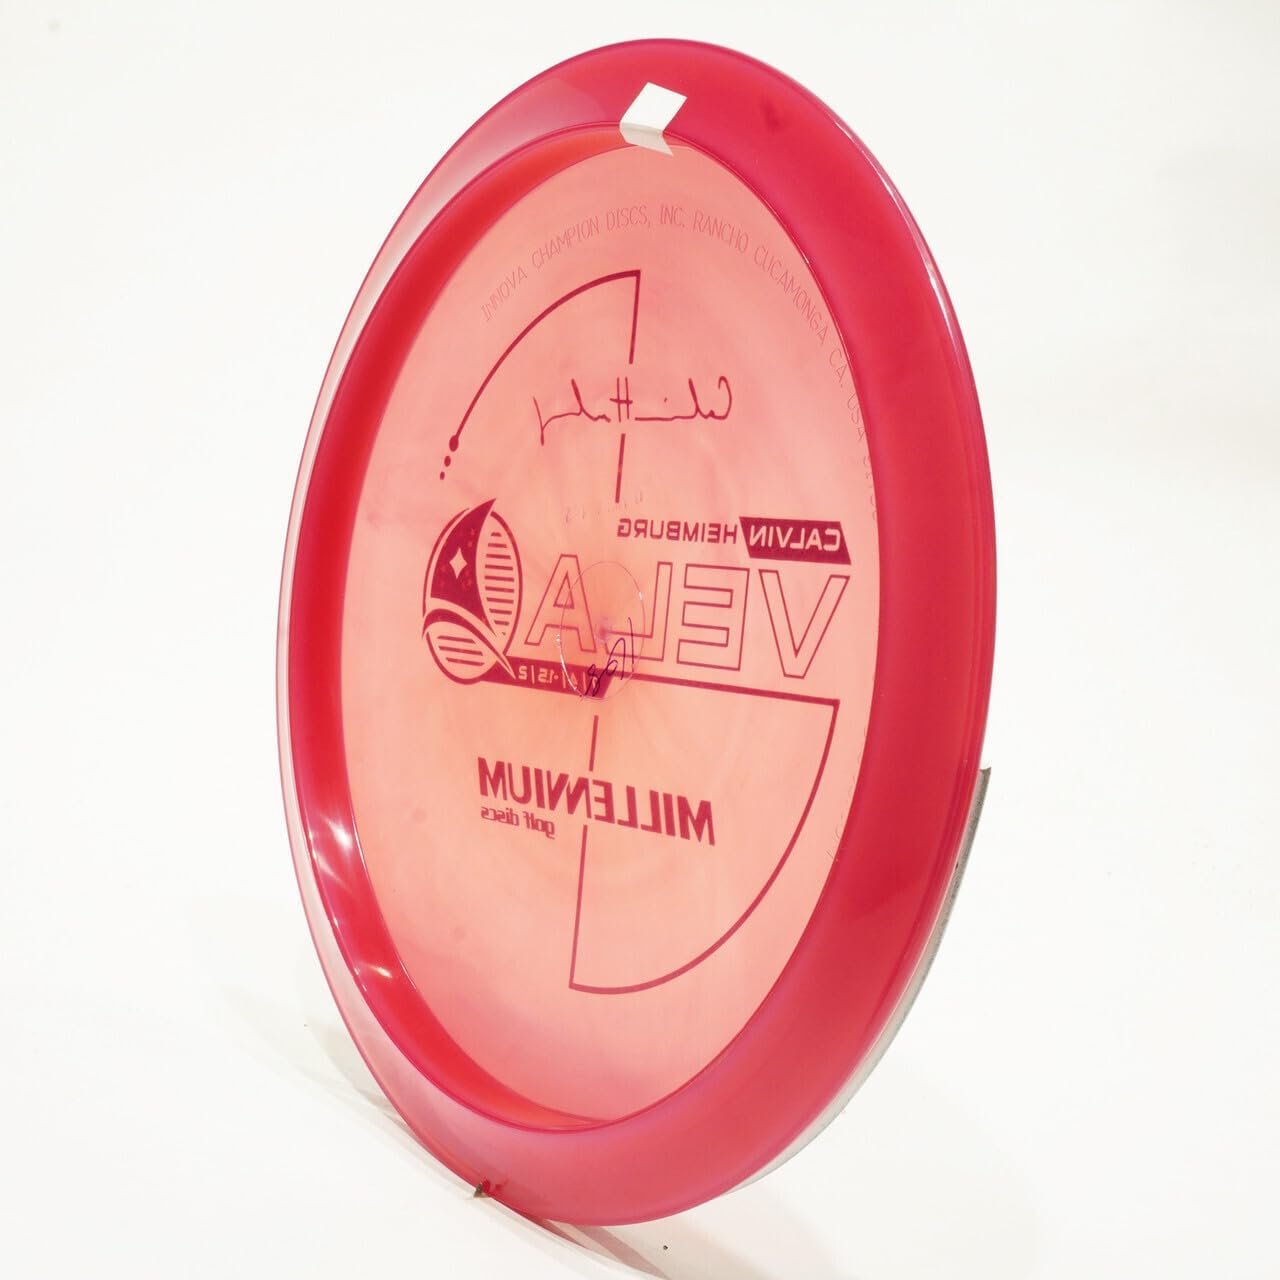 Millennium Calvin Heimburg Quantum Vela - Signature Edition Fairway Driver Golf Disc, Pick Color/Weight [Stamp  Exact Color May Vary]